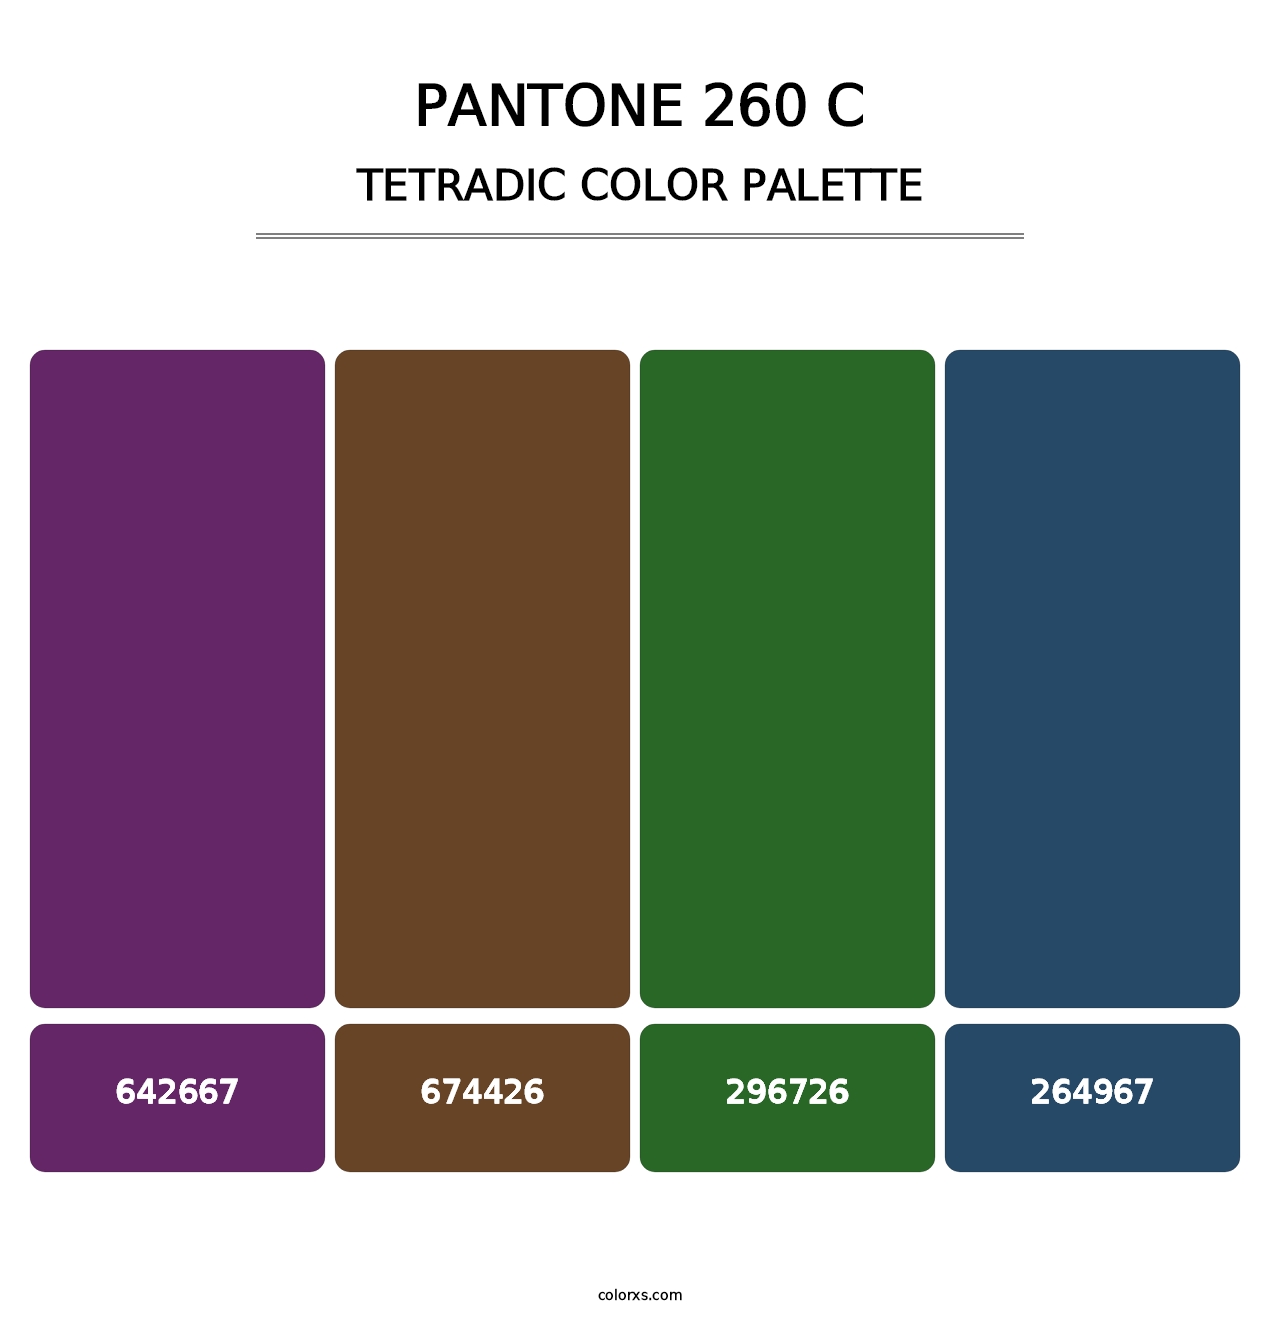 PANTONE 260 C - Tetradic Color Palette